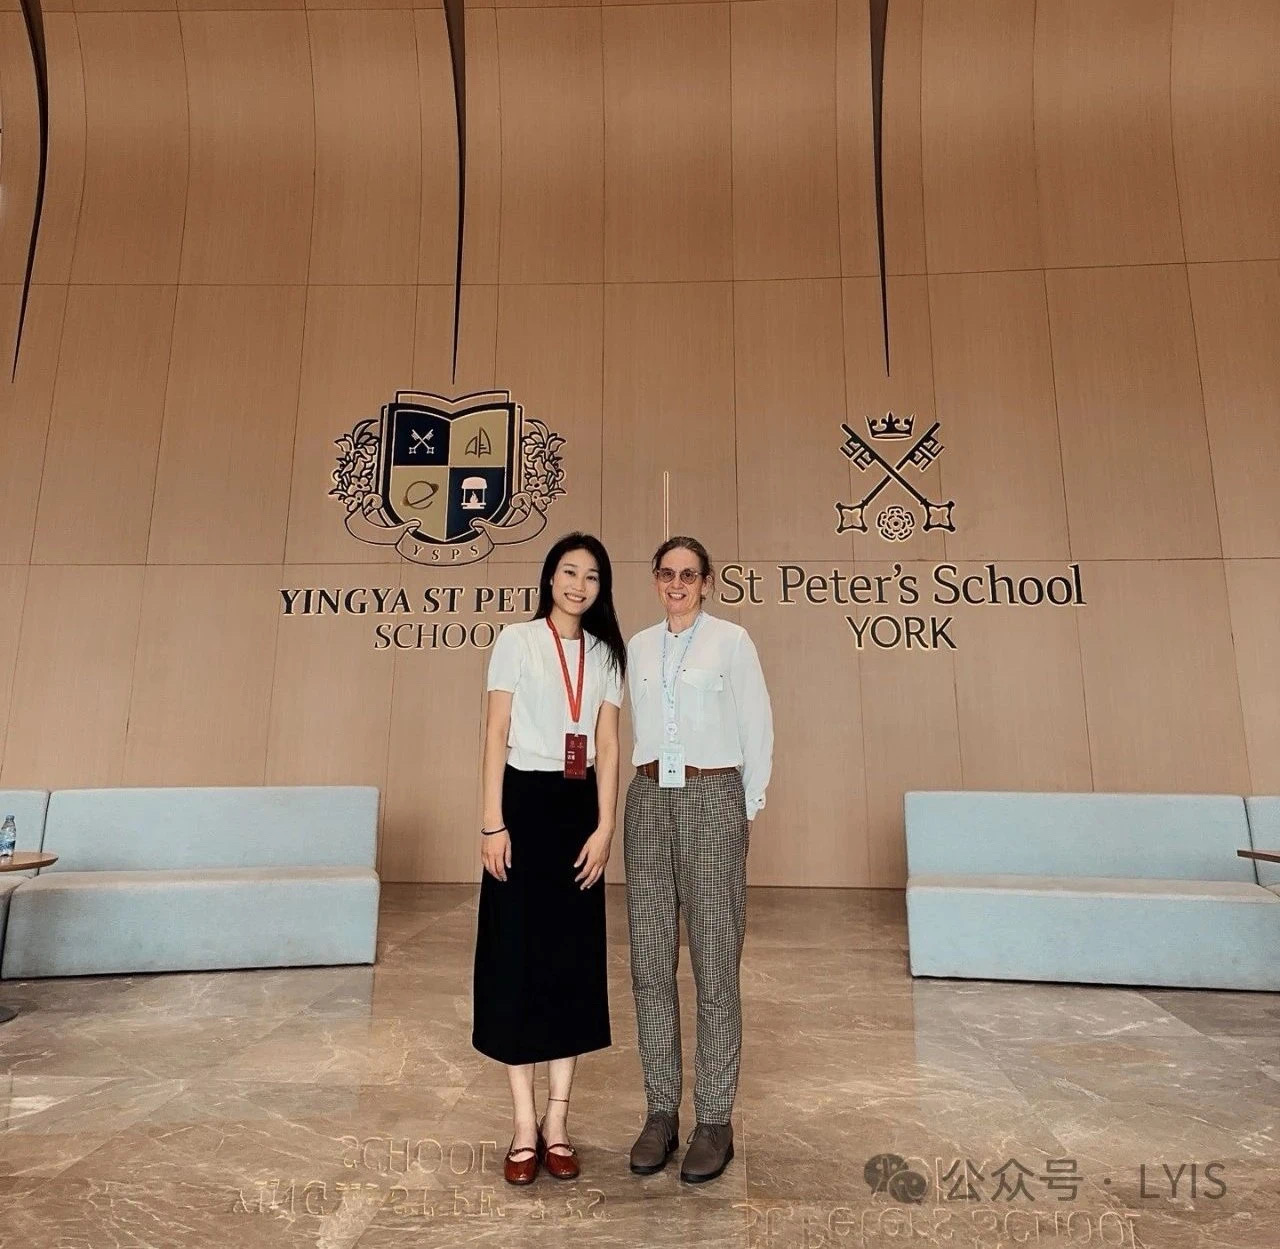 LYIS’ Trip to Yingya St Peter’s School, Hainan